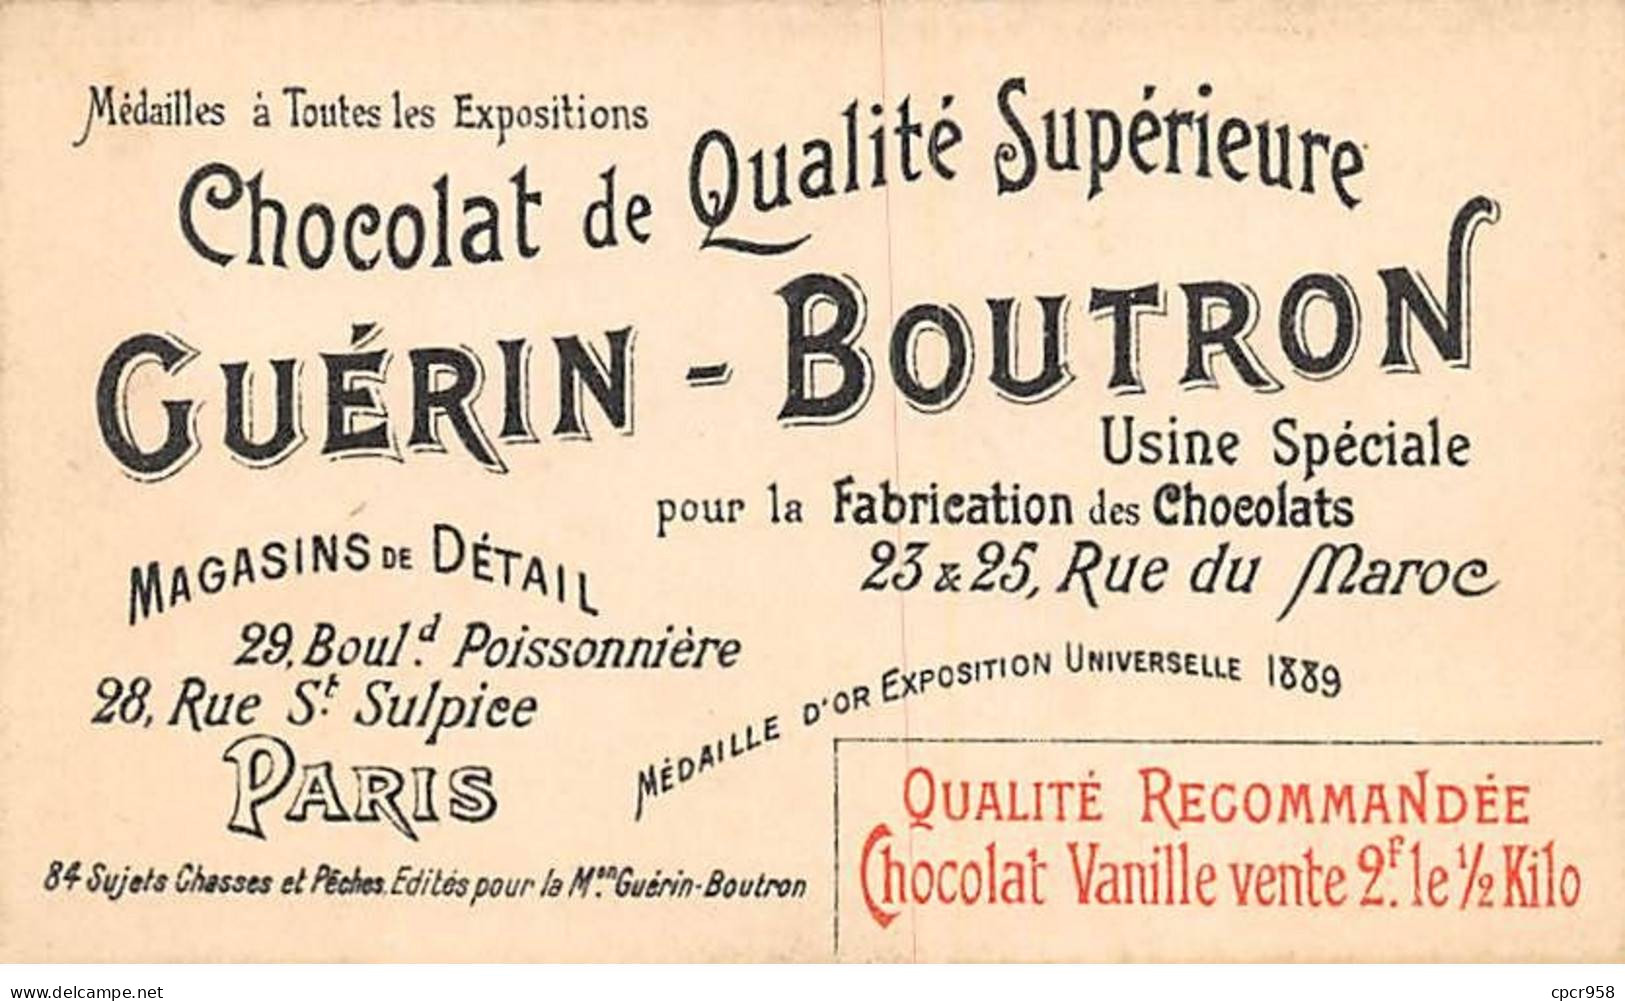 Chromos -COR10566 - Chocolat Guérin-Boutron- Chasses Et Pêches-Filet- Petits Oiseaux - Chasseur - 6x10 Cm Env. - Guérin-Boutron